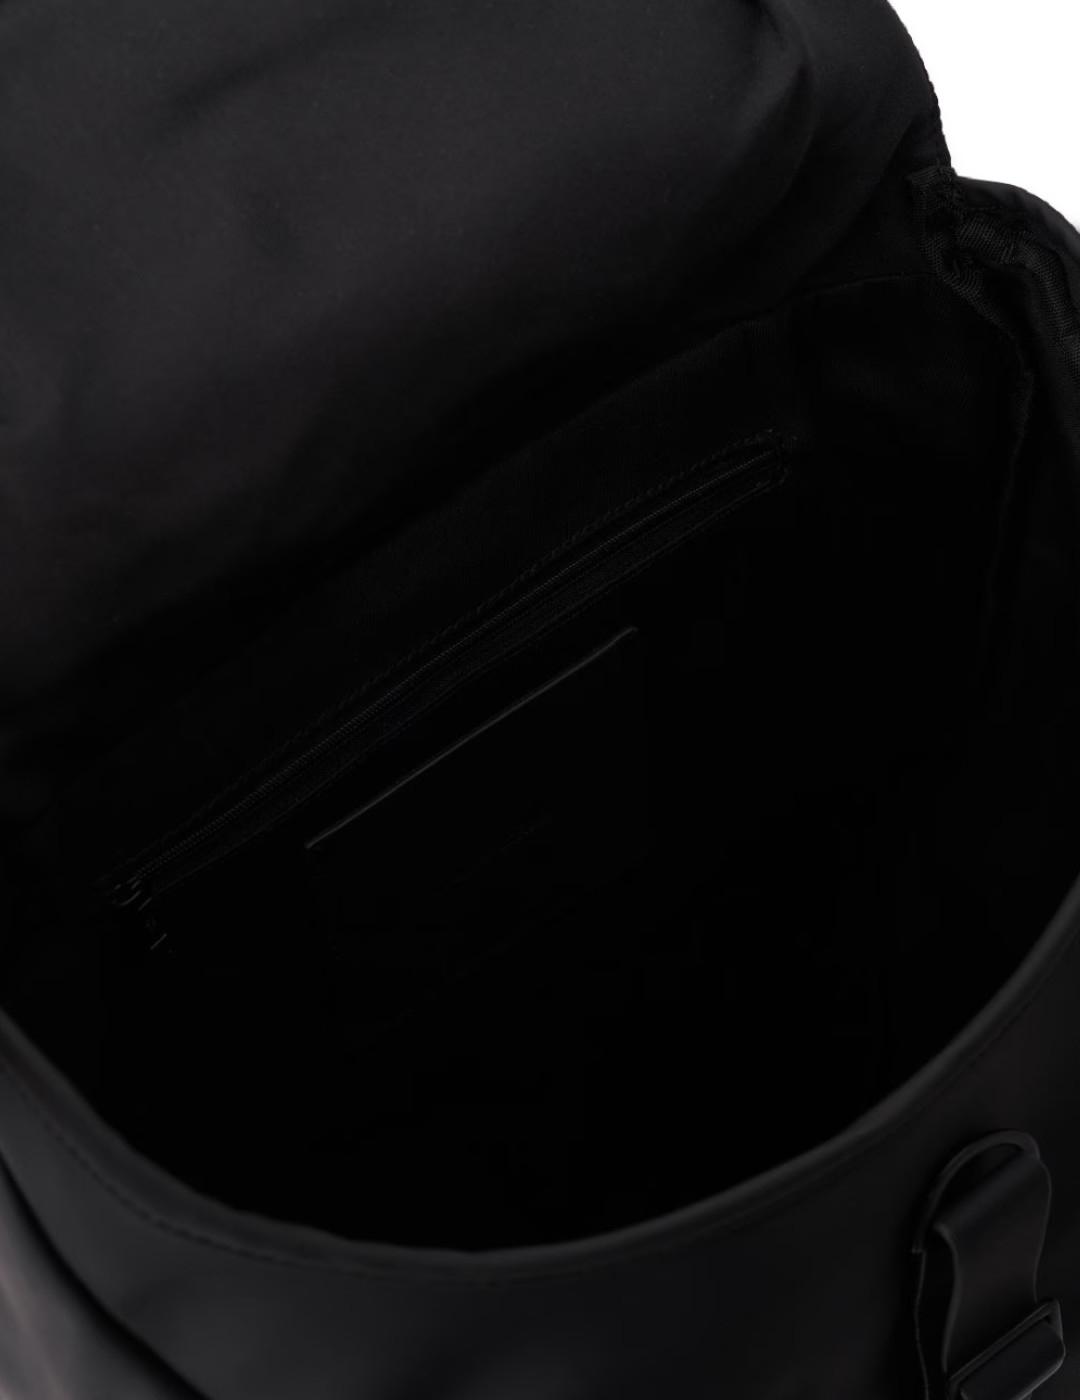 Mochila Salsa con bolsillos laterales en negro unisex